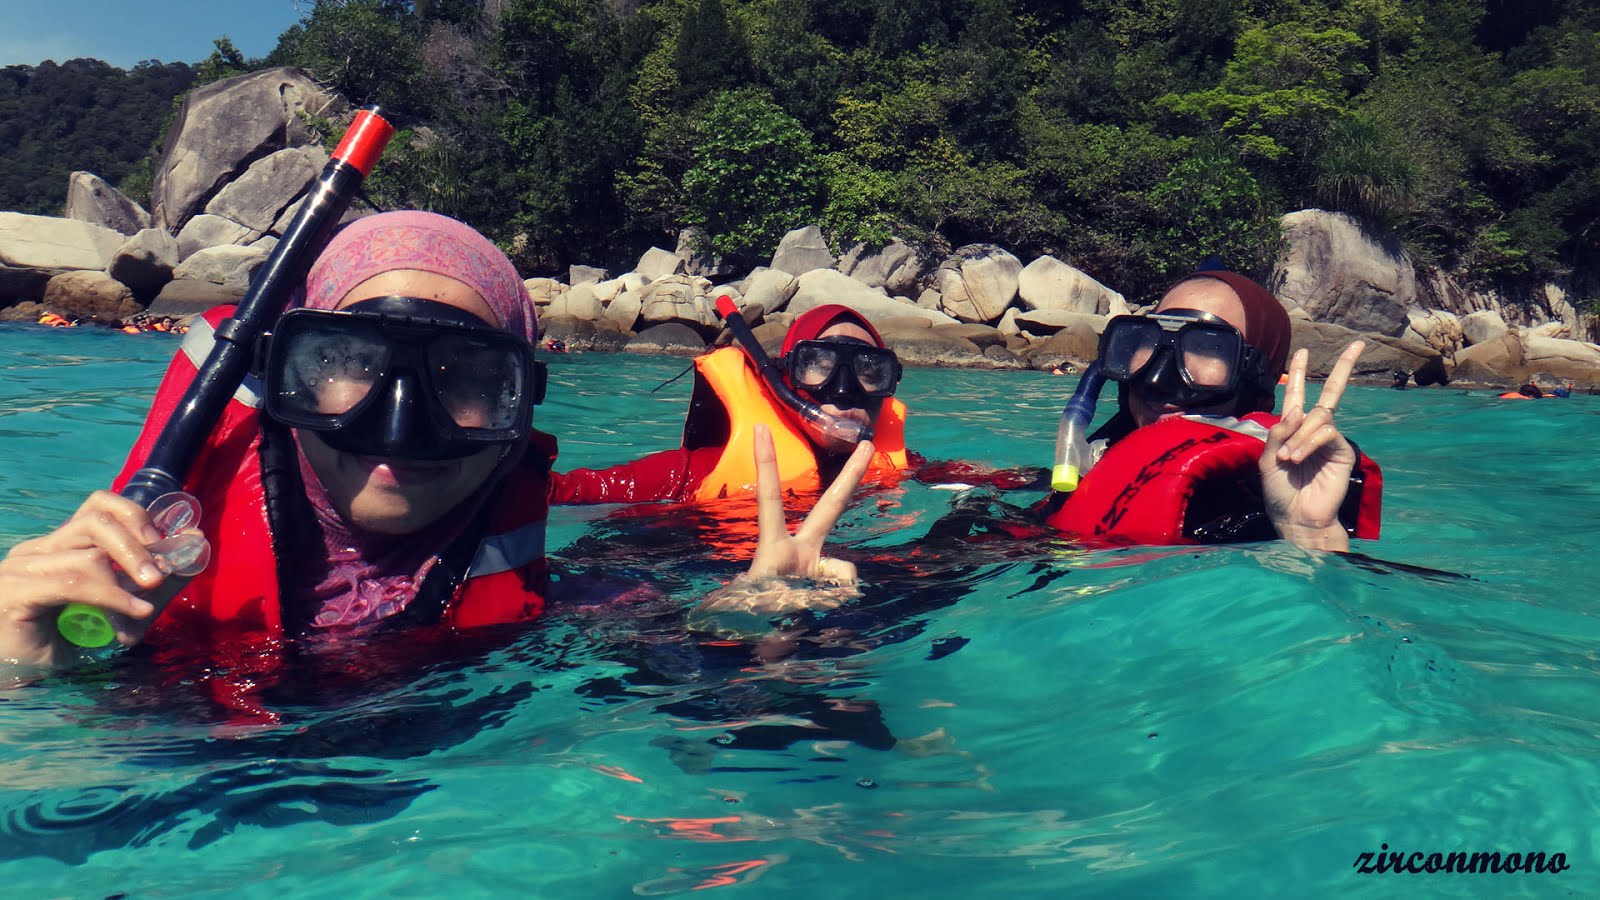 korea wallpaper melaka,snorkeling,outdoor recreation,recreation,lifejacket,swimming